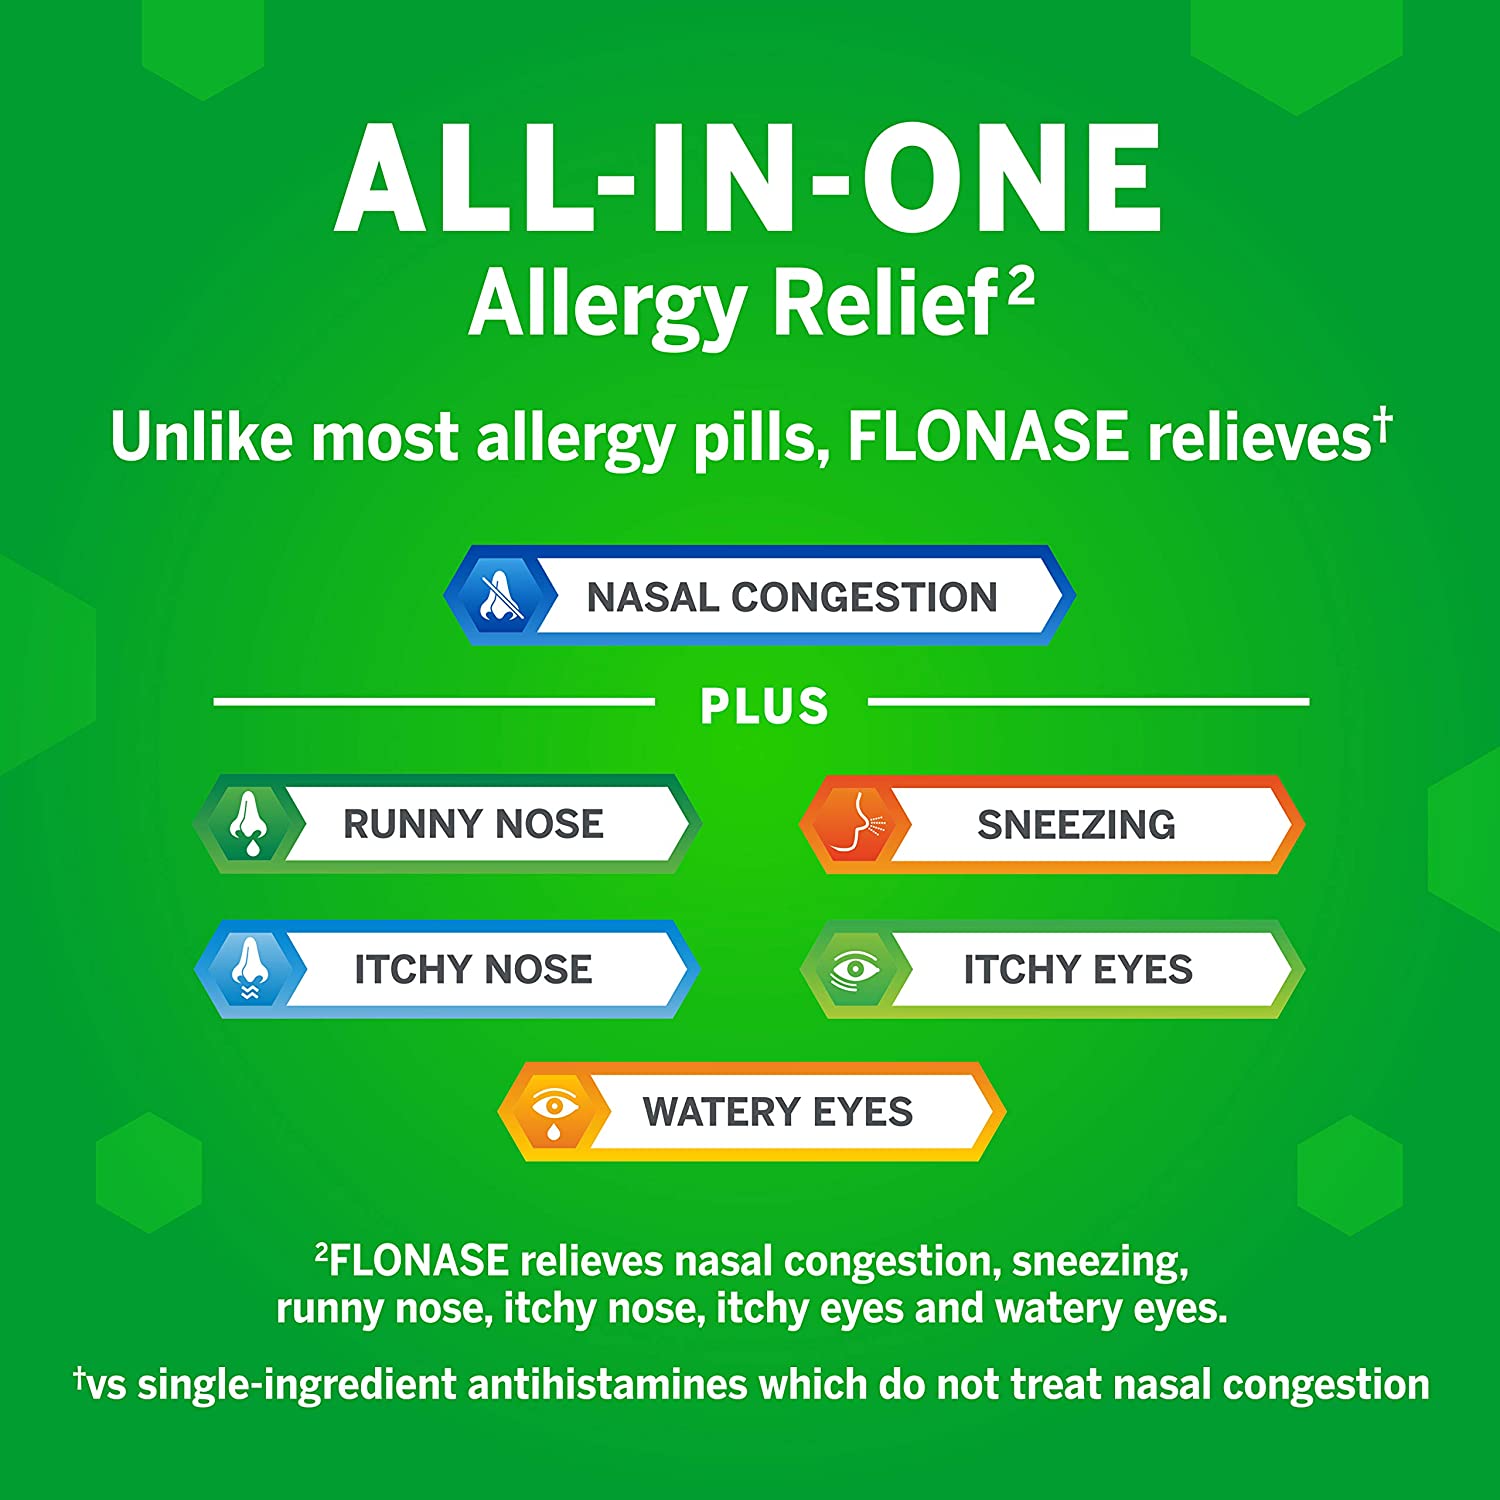 Flonase Allergy Relief Nasal Spray, 144 Ct